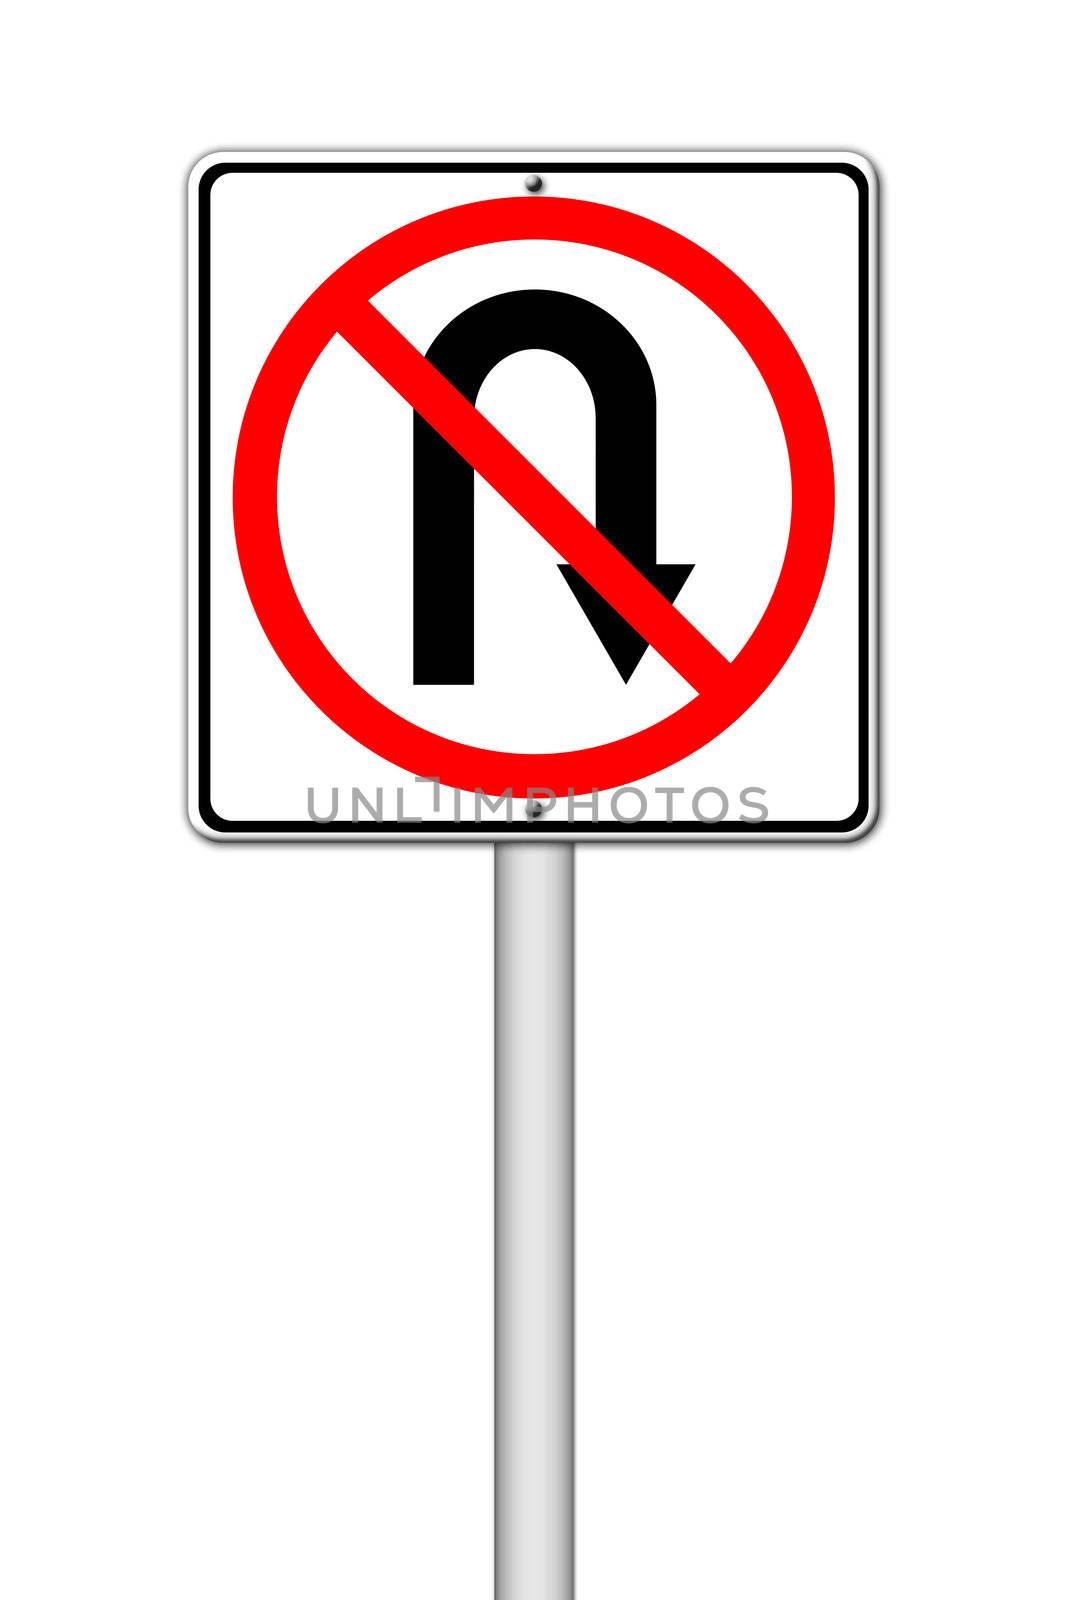 No return back road sign on white background